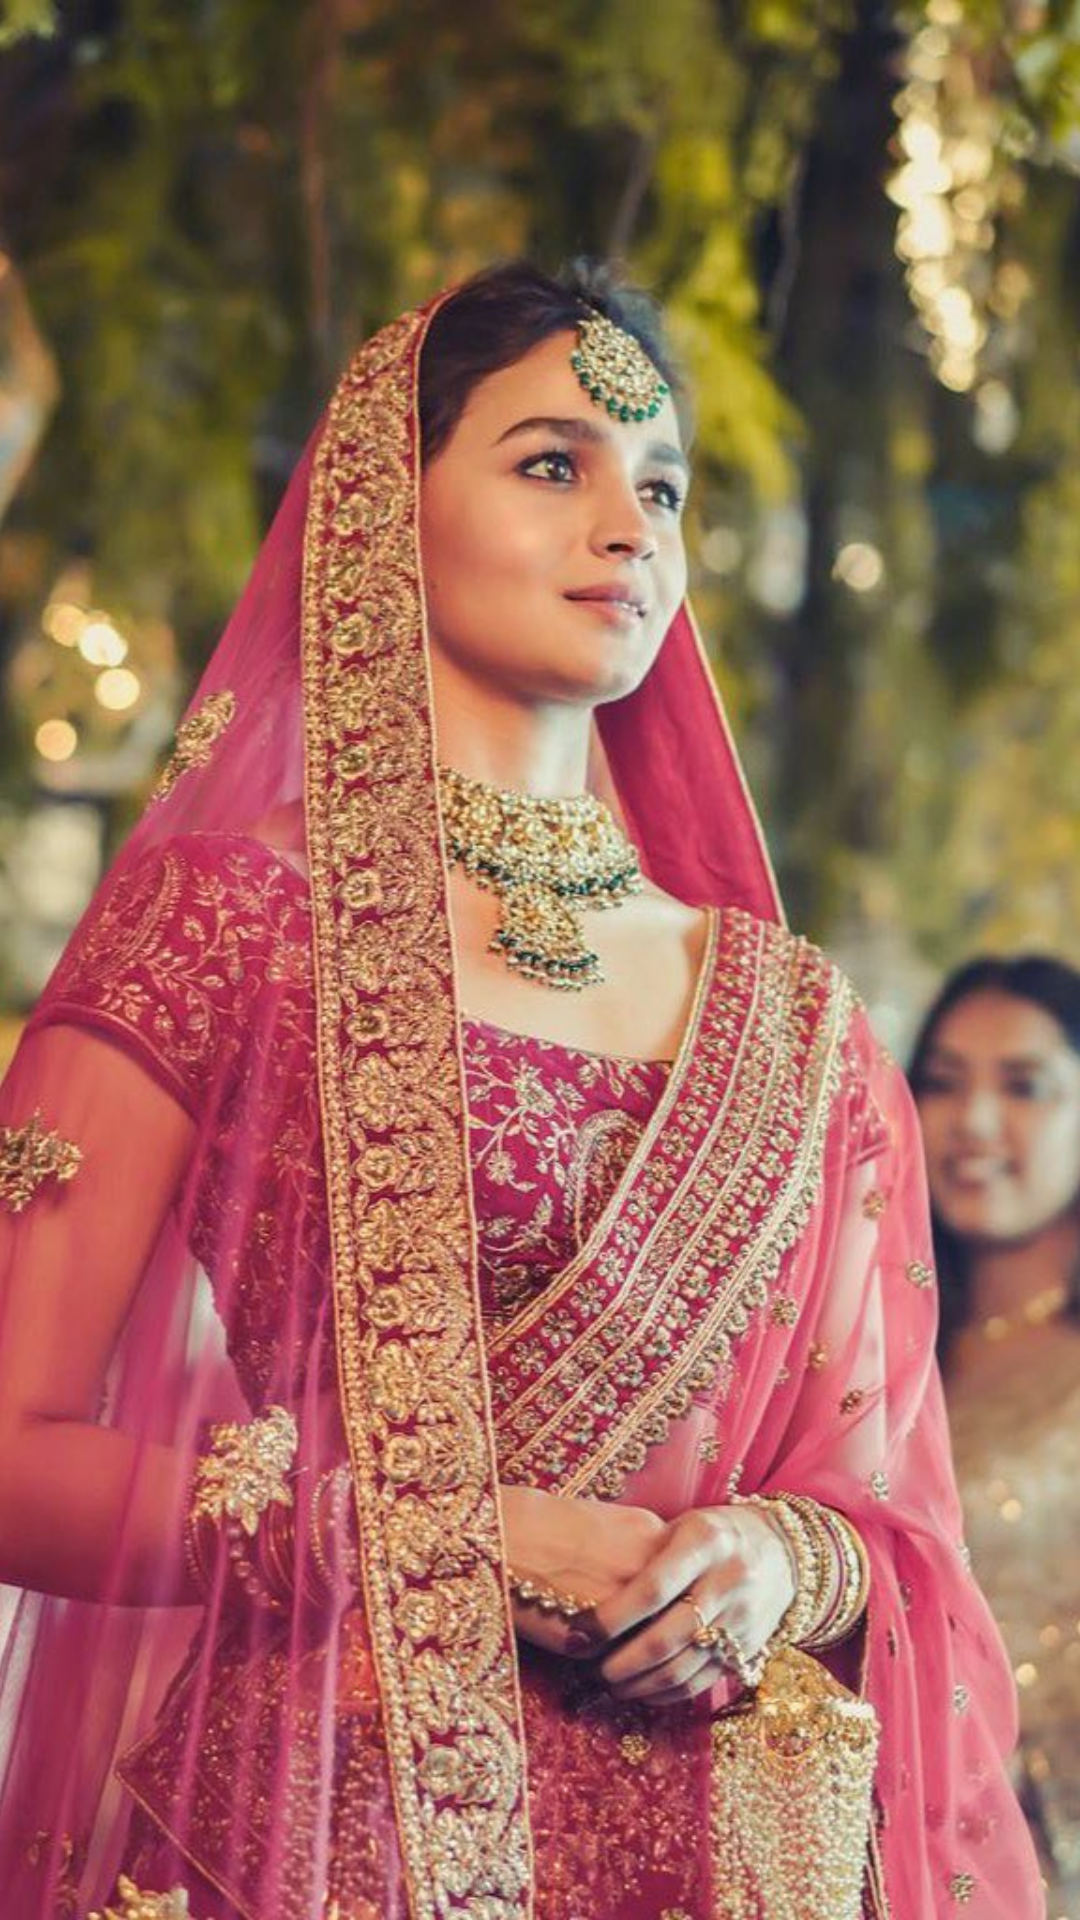 Hina Khan  Maharashtrian Makeup Look  Mugeek Vidalondon  Indian wedding  hairstyles Indian wedding Bridal makeup looks